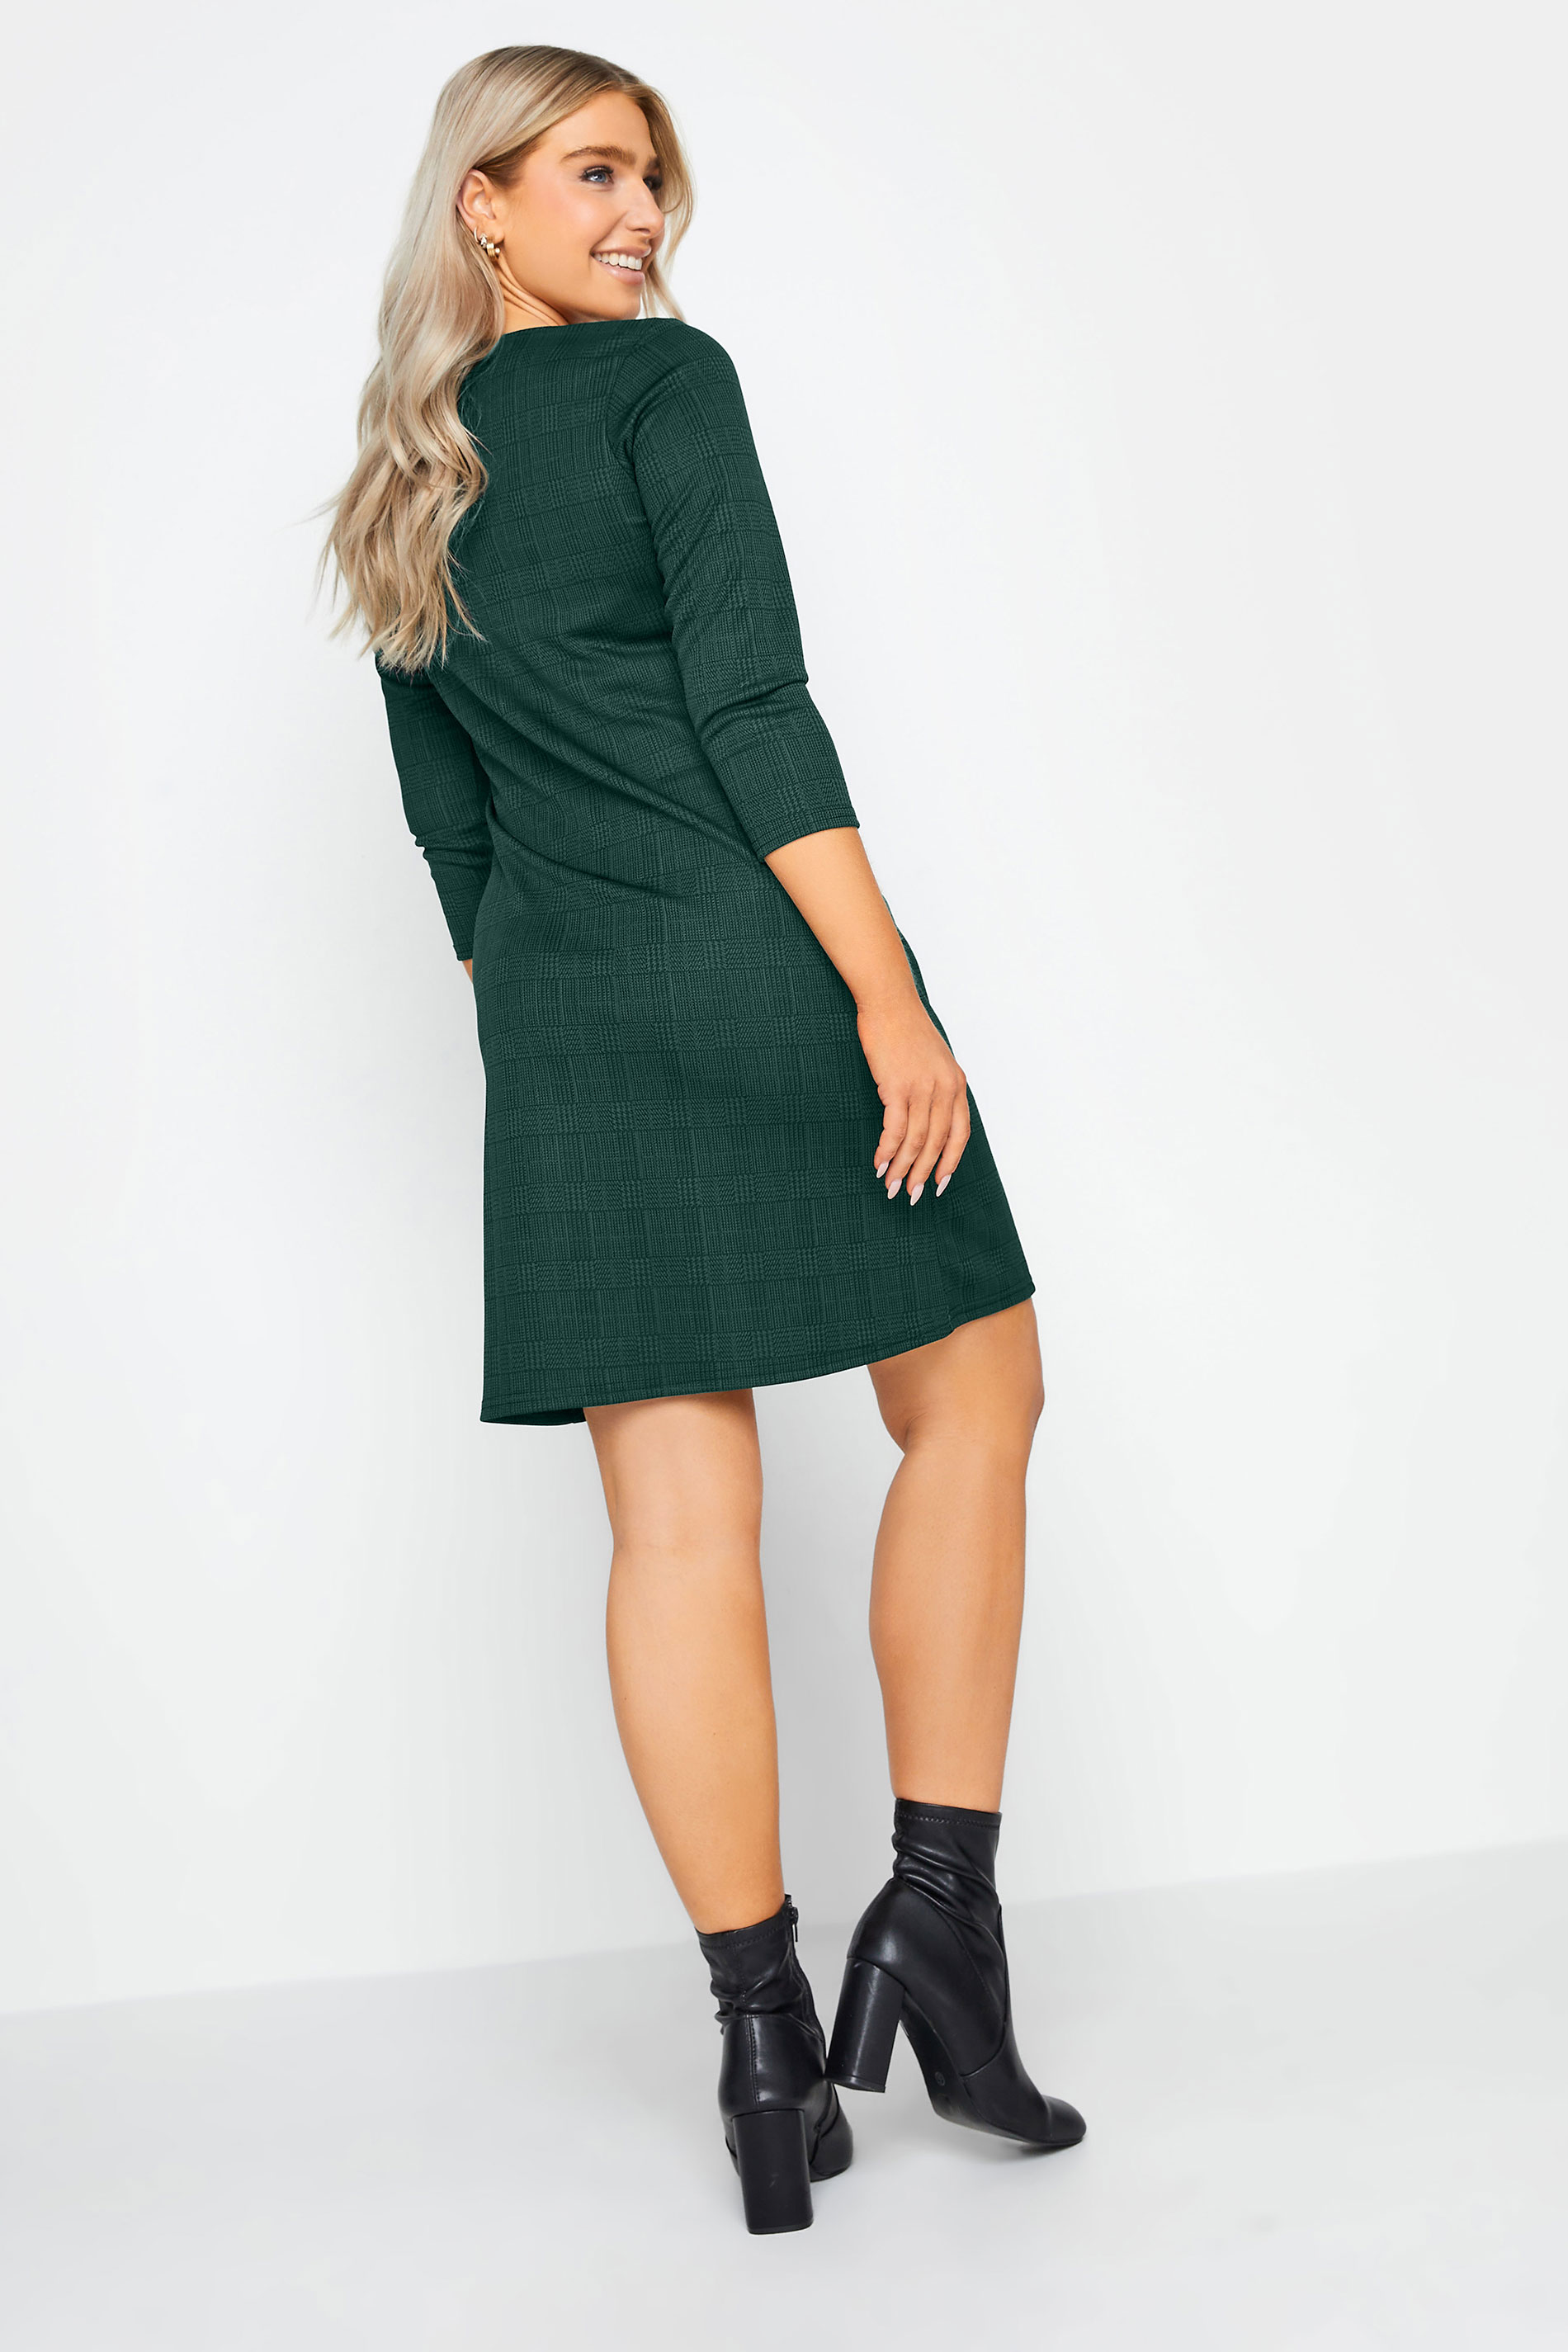 M&Co Petite Teal Green Check Print Shift Dress | M&Co 3